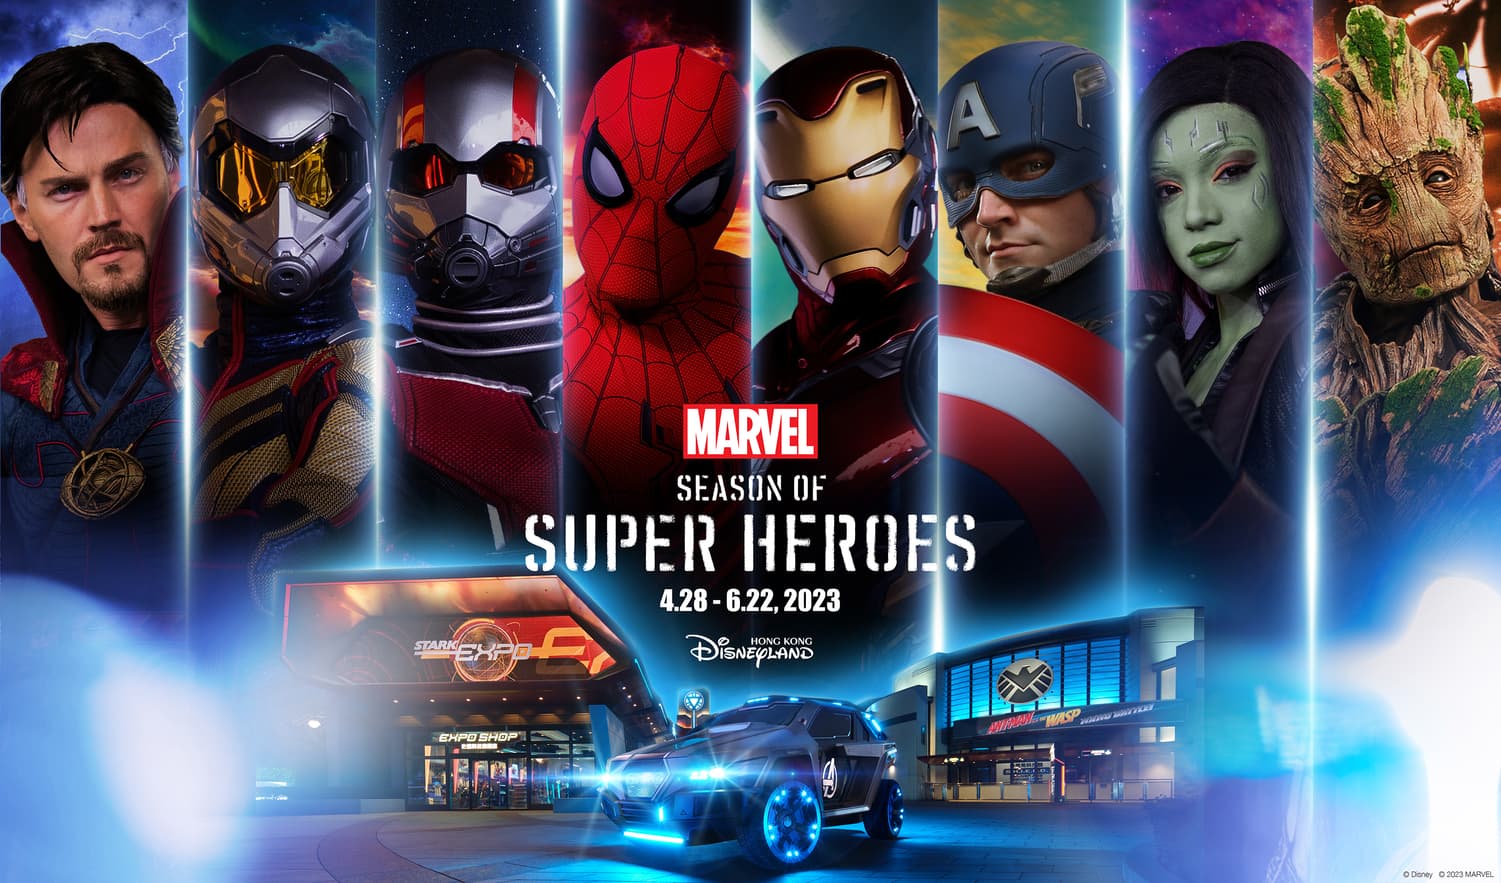 Marvel Season of Super Heroes Arrives at Hong Kong Disneyland Resort